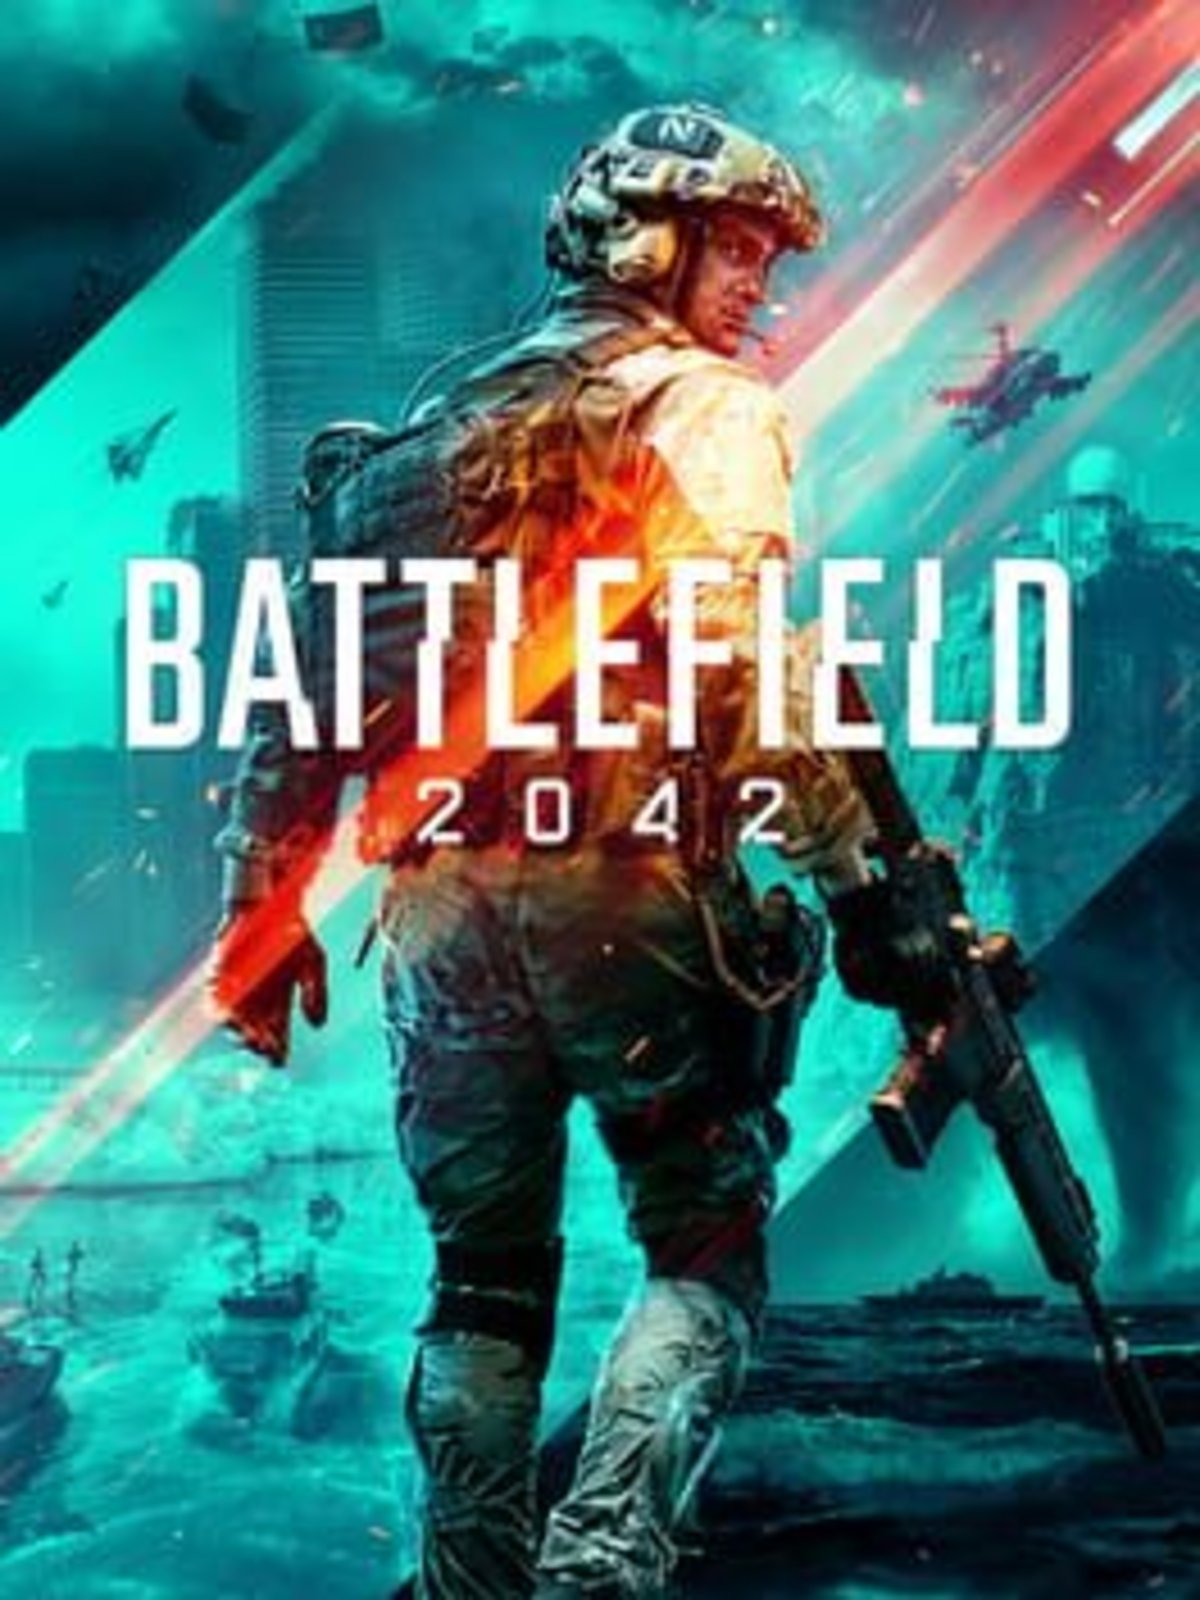 Announced Battlefield Portal, a new Battlefield 2042 mode for the nostalgic